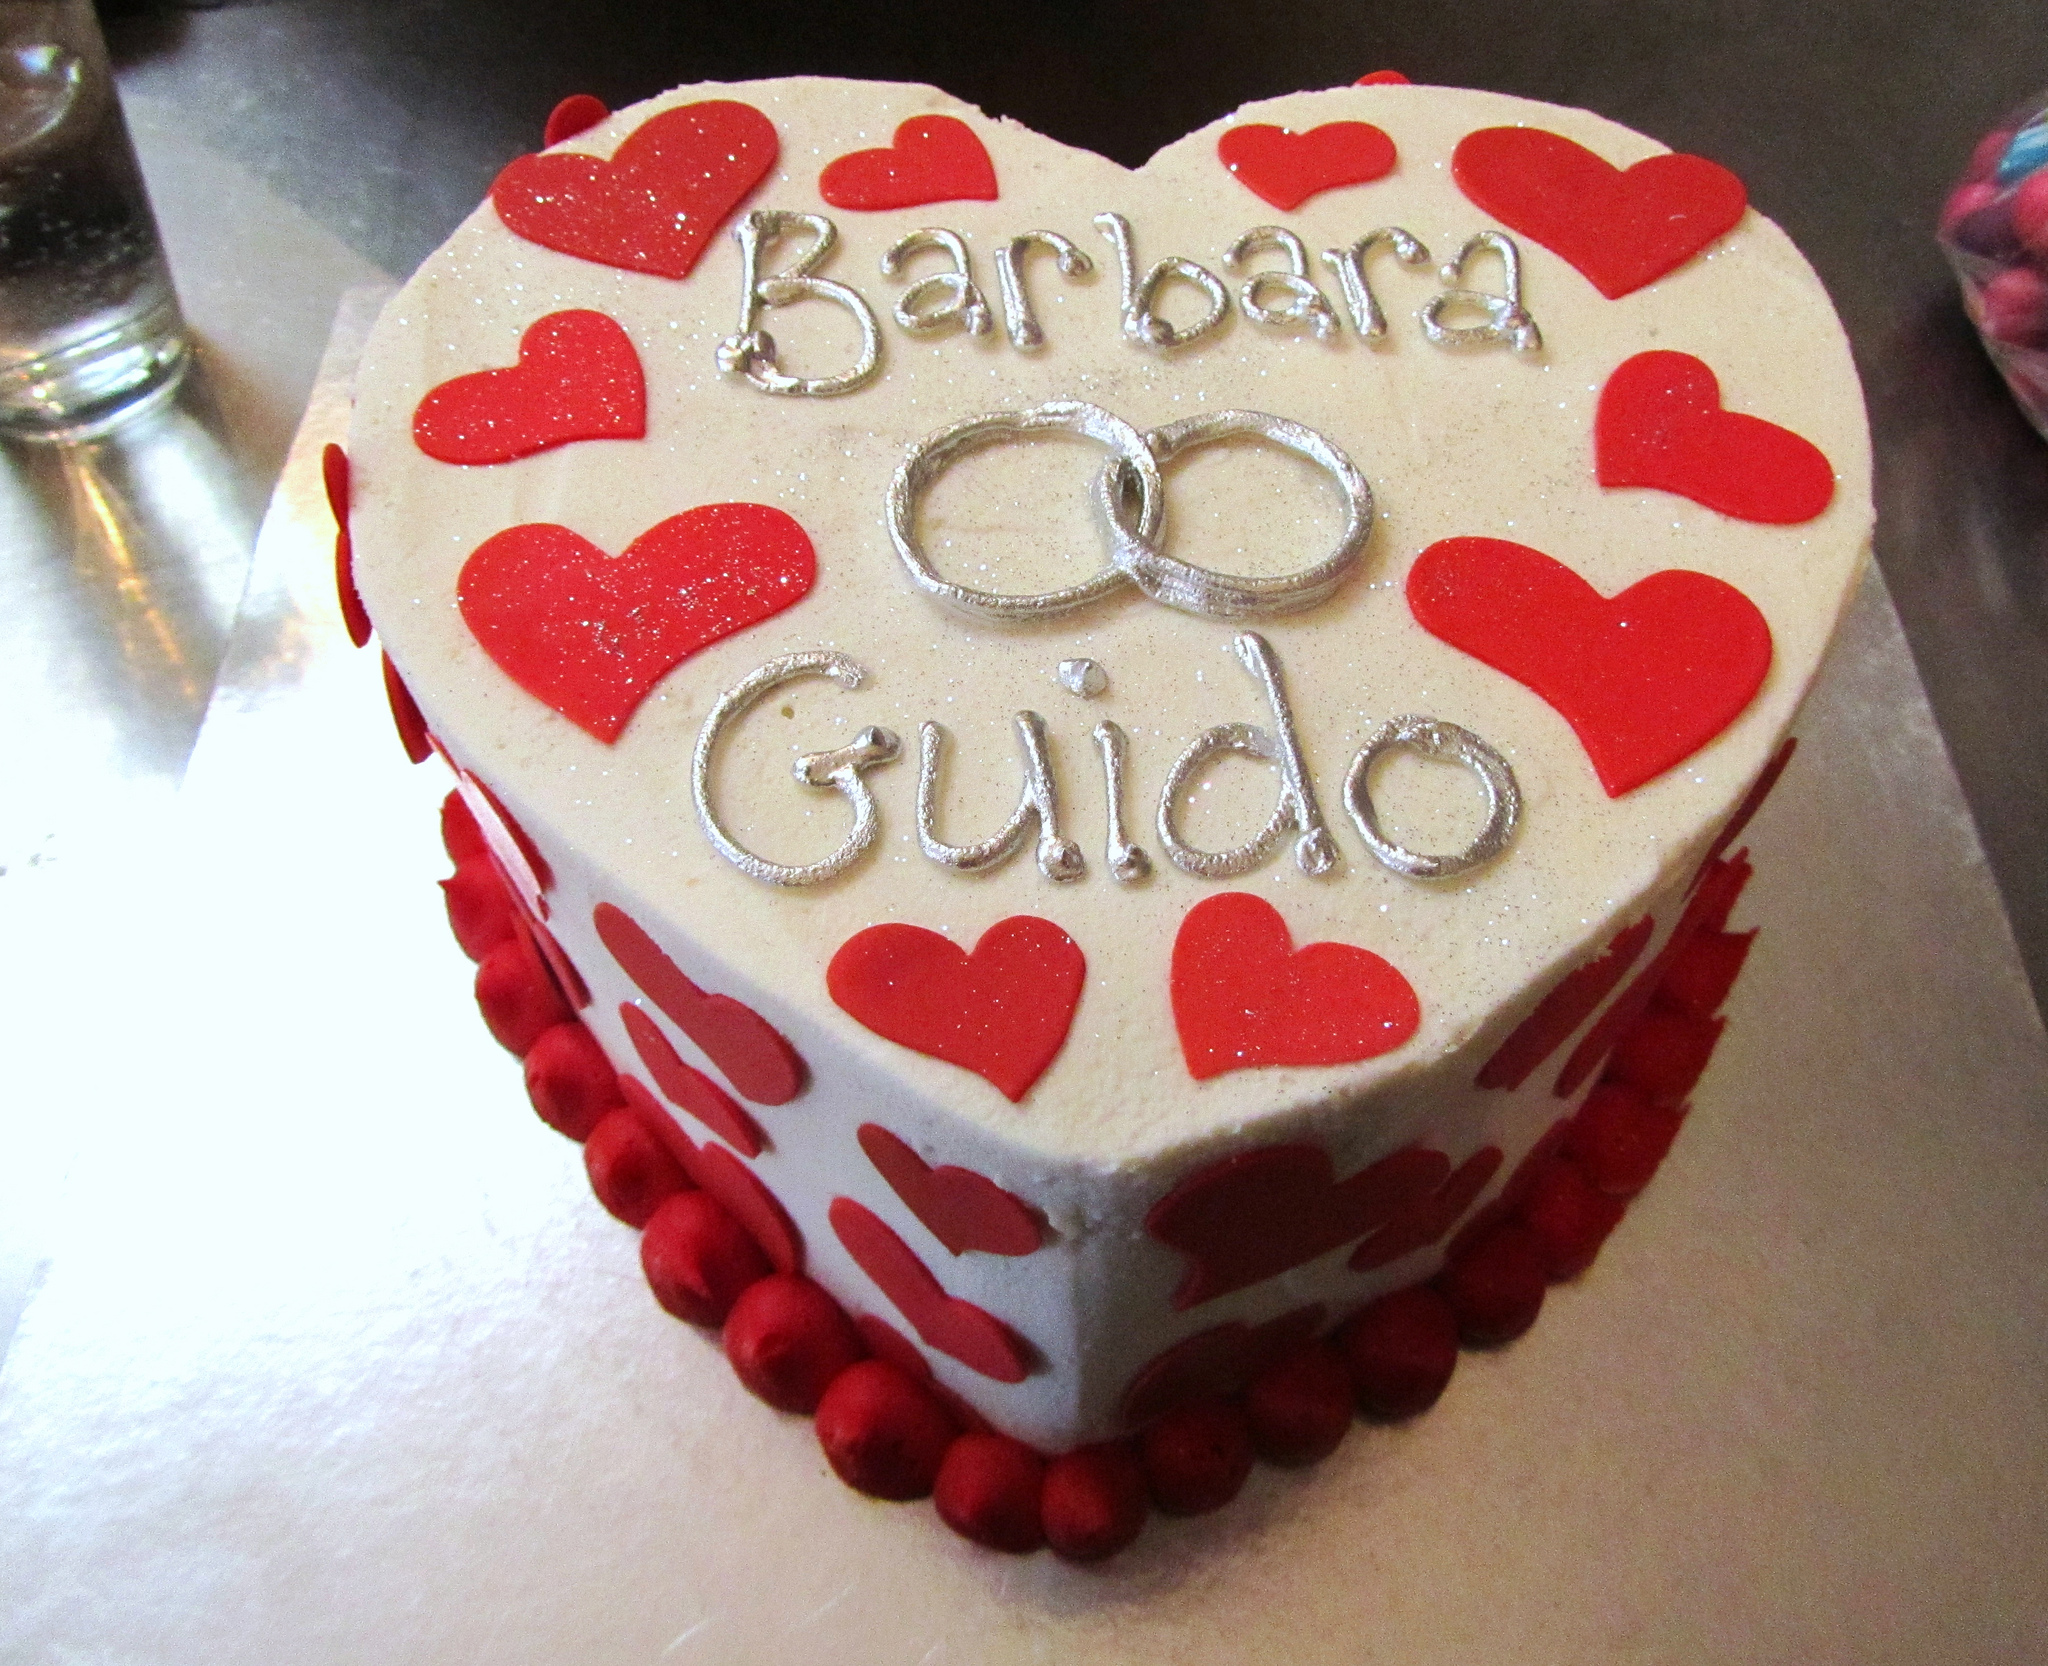 Heart shaped Wicked Chocolate wedding cake